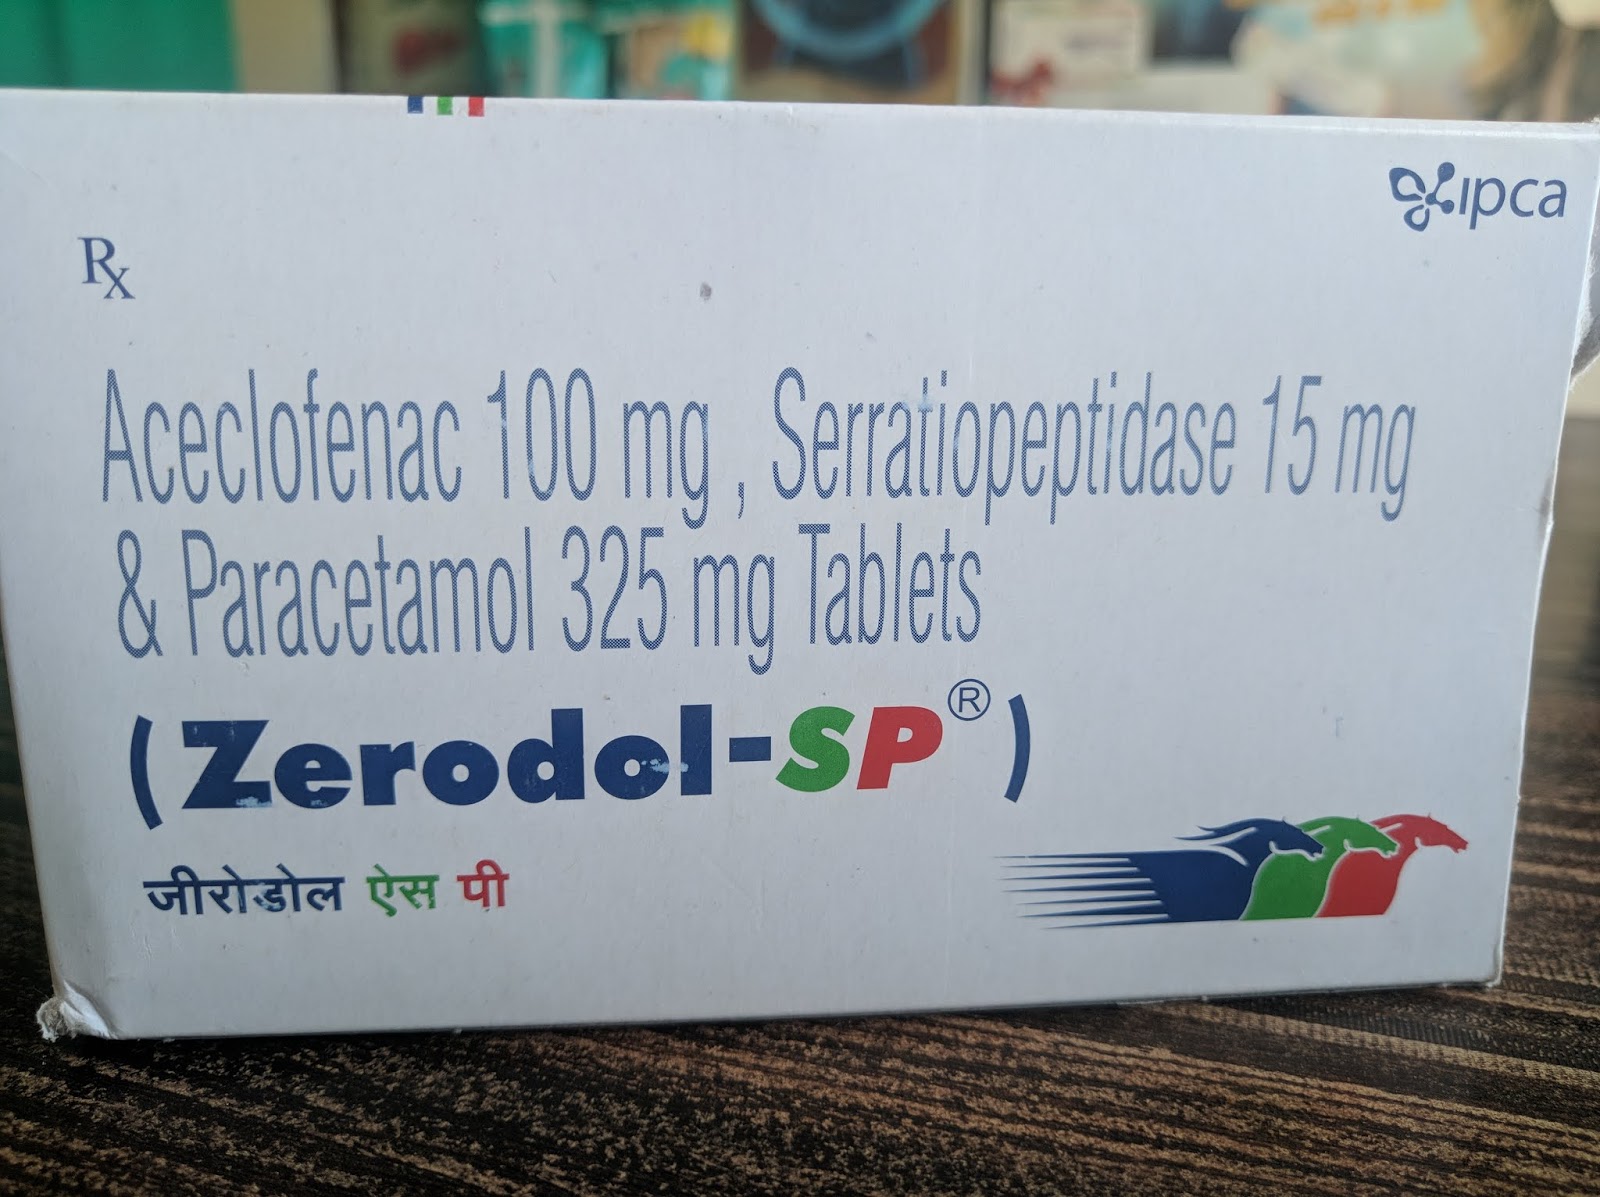 Zerodol Sp In Hindi ज र ड ल एसप क